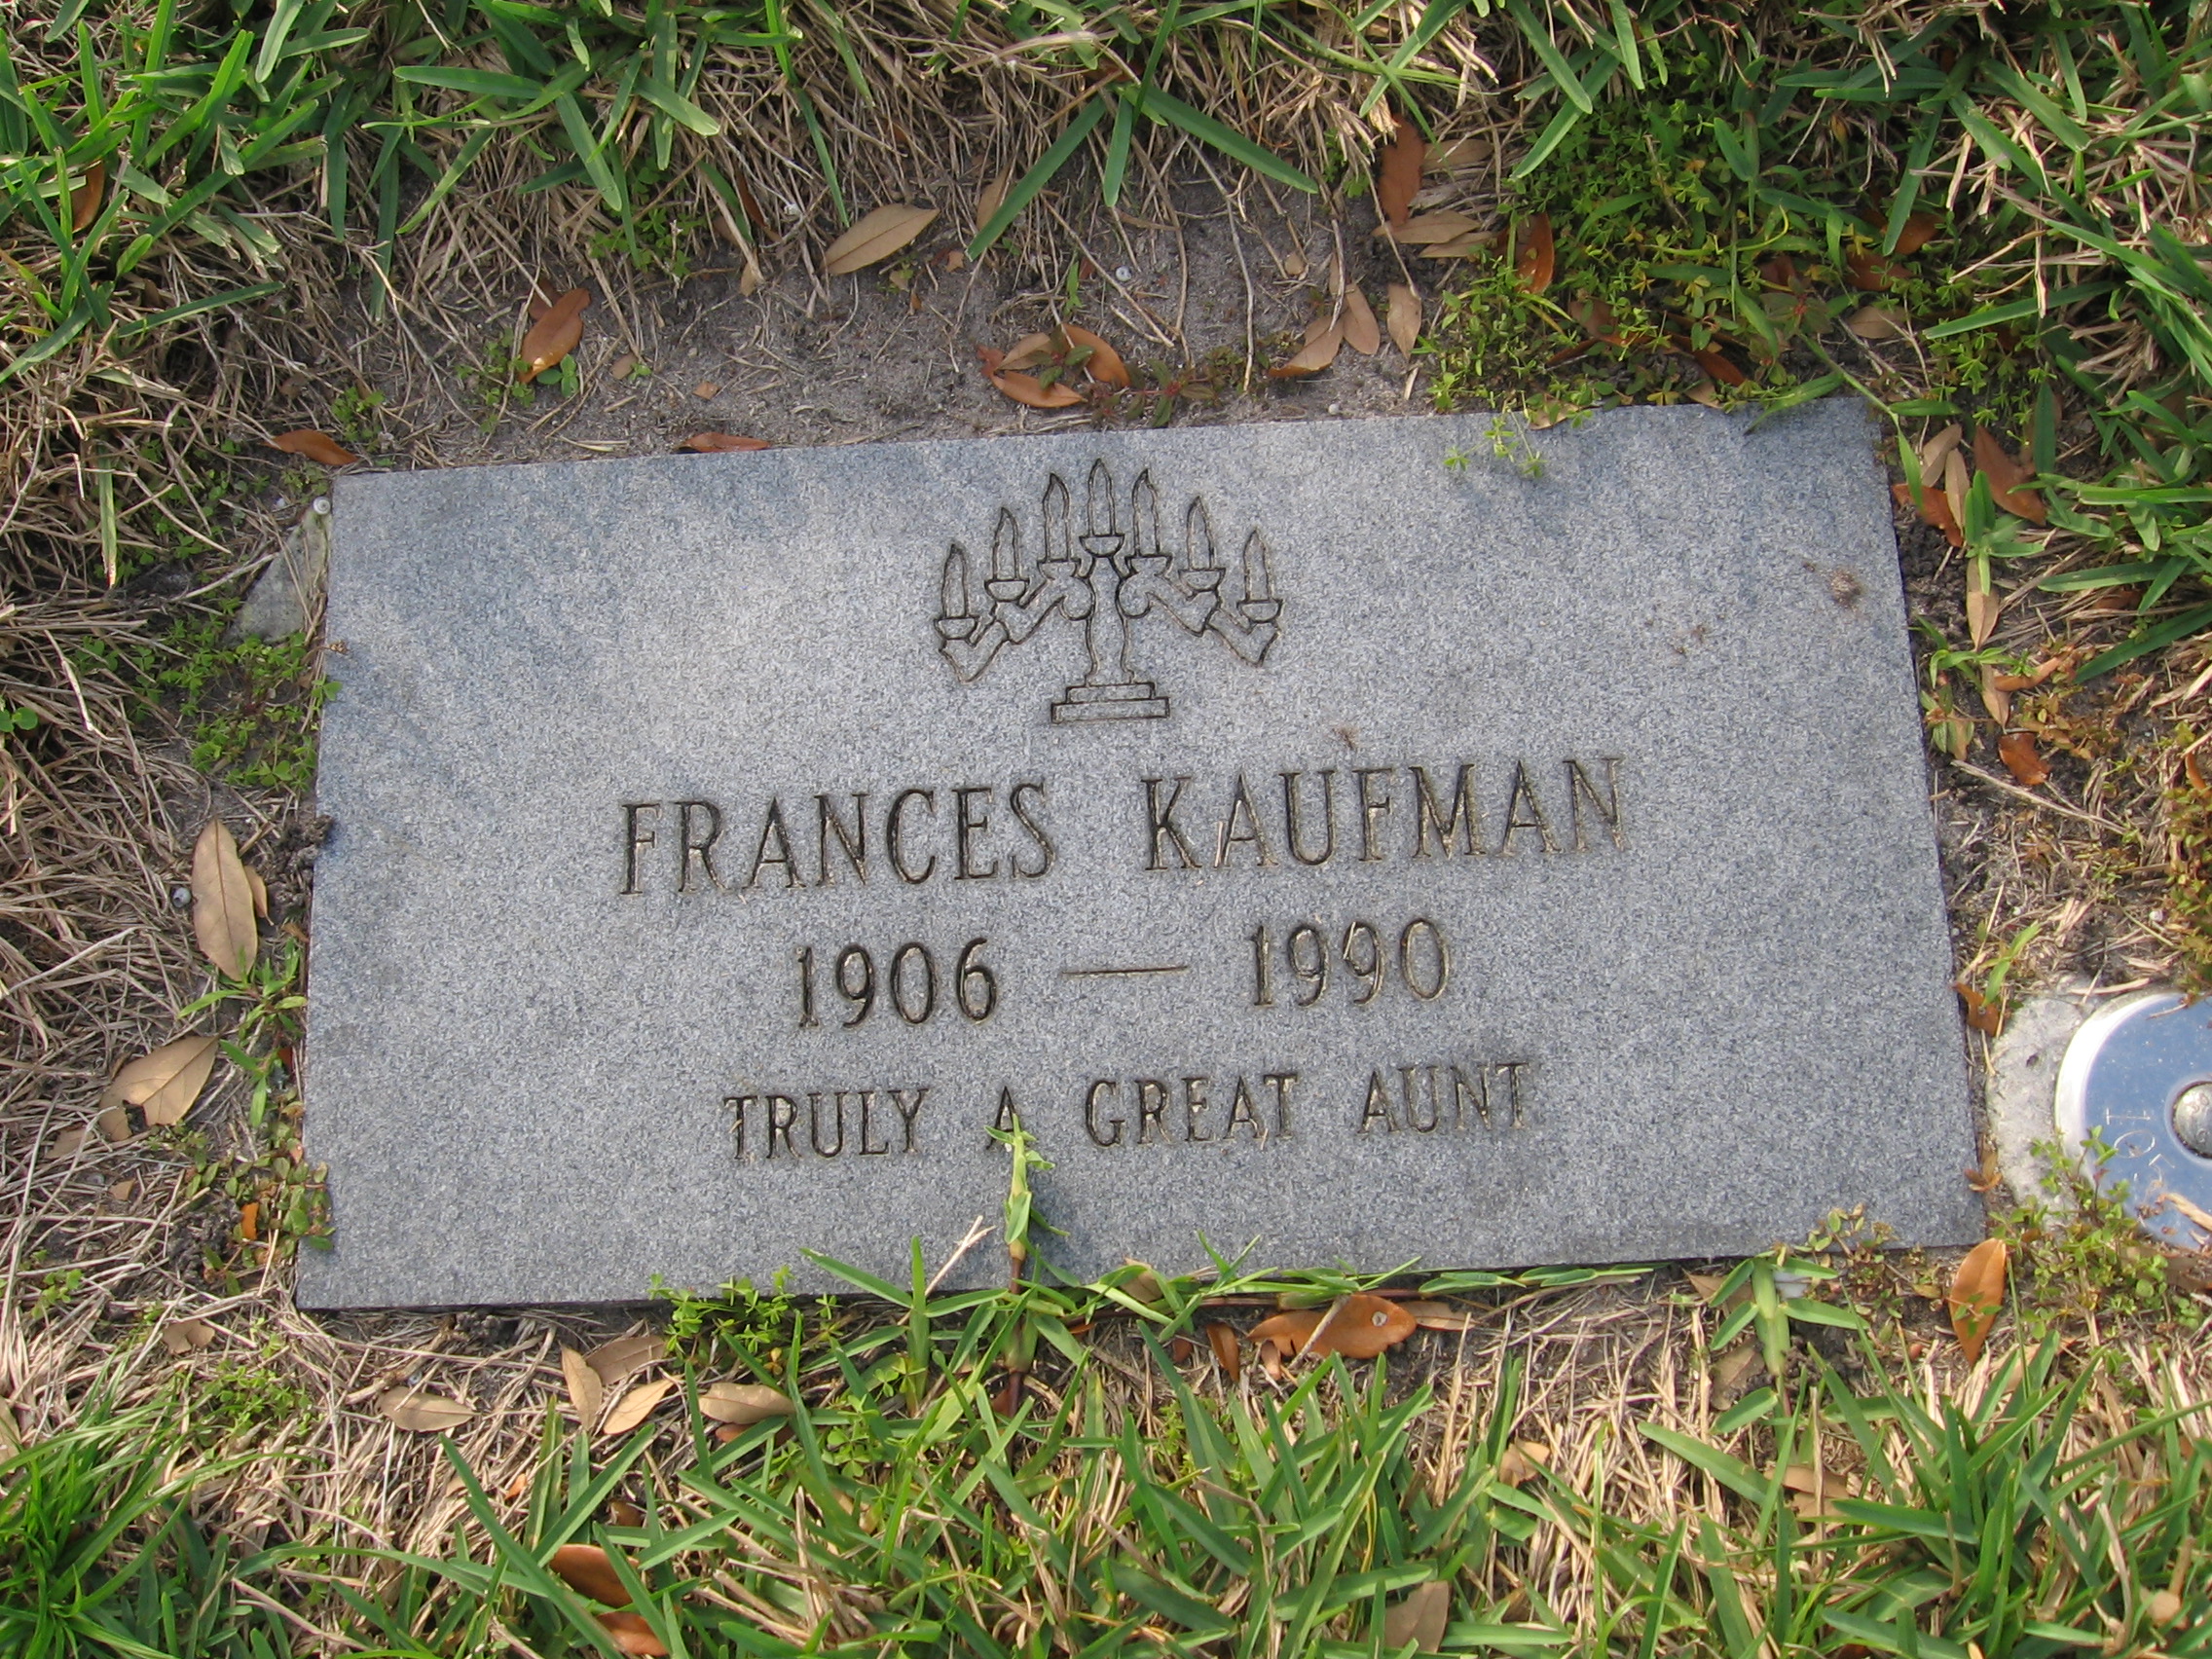 Frances Kaufman